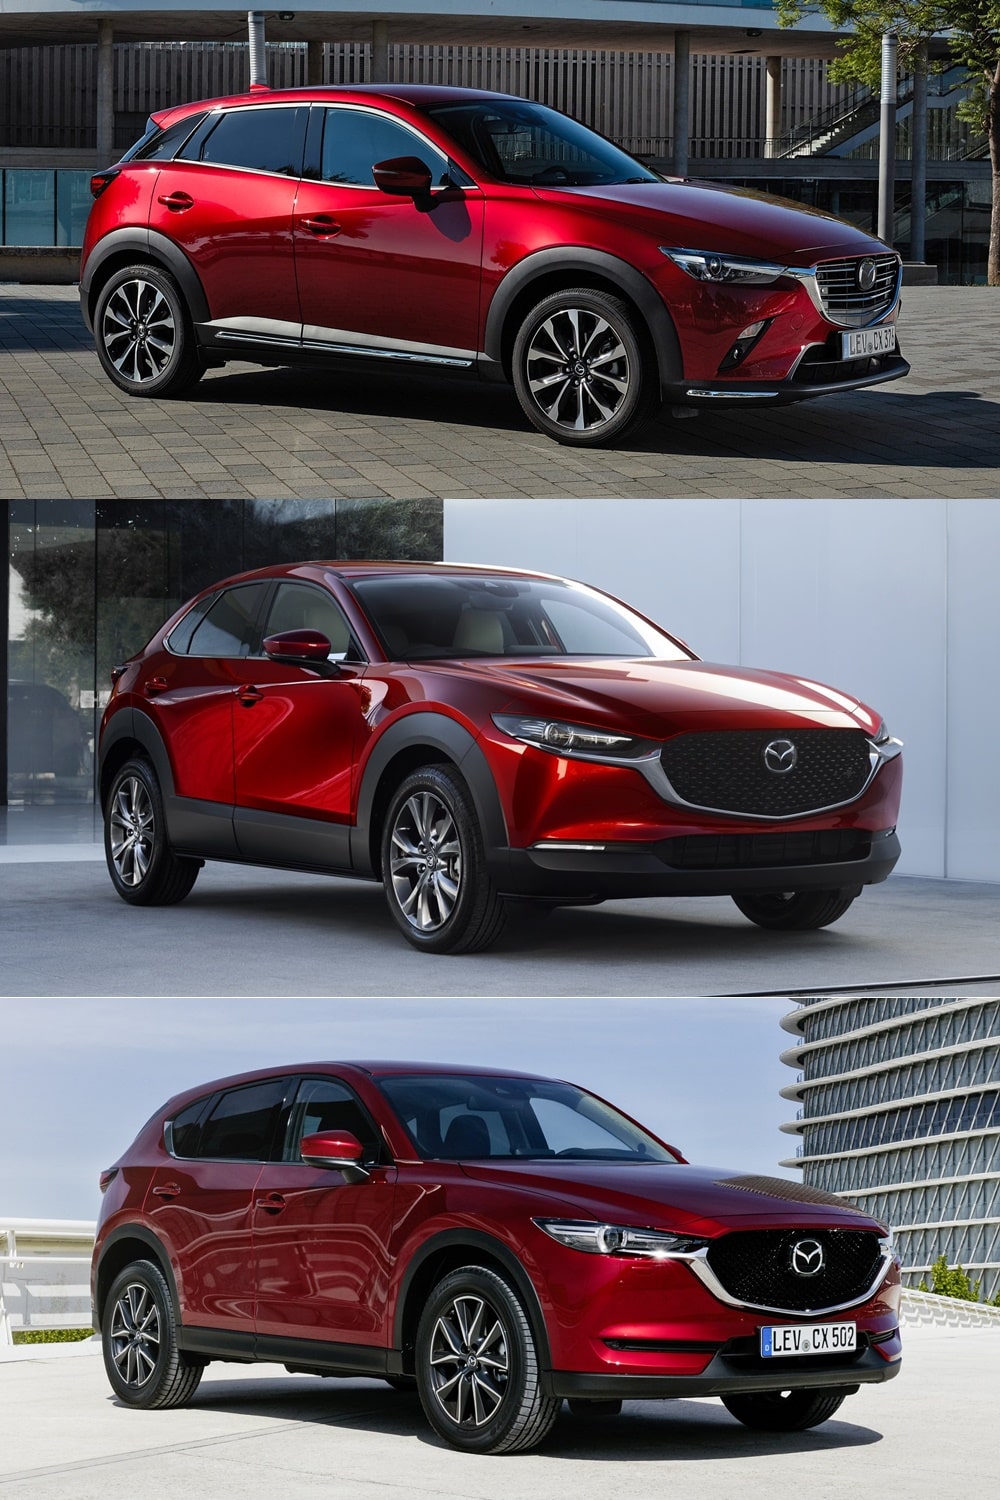 Comparación visual Mazda CX3 vs. CX30 vs. CX5 Juzga tú mismo si